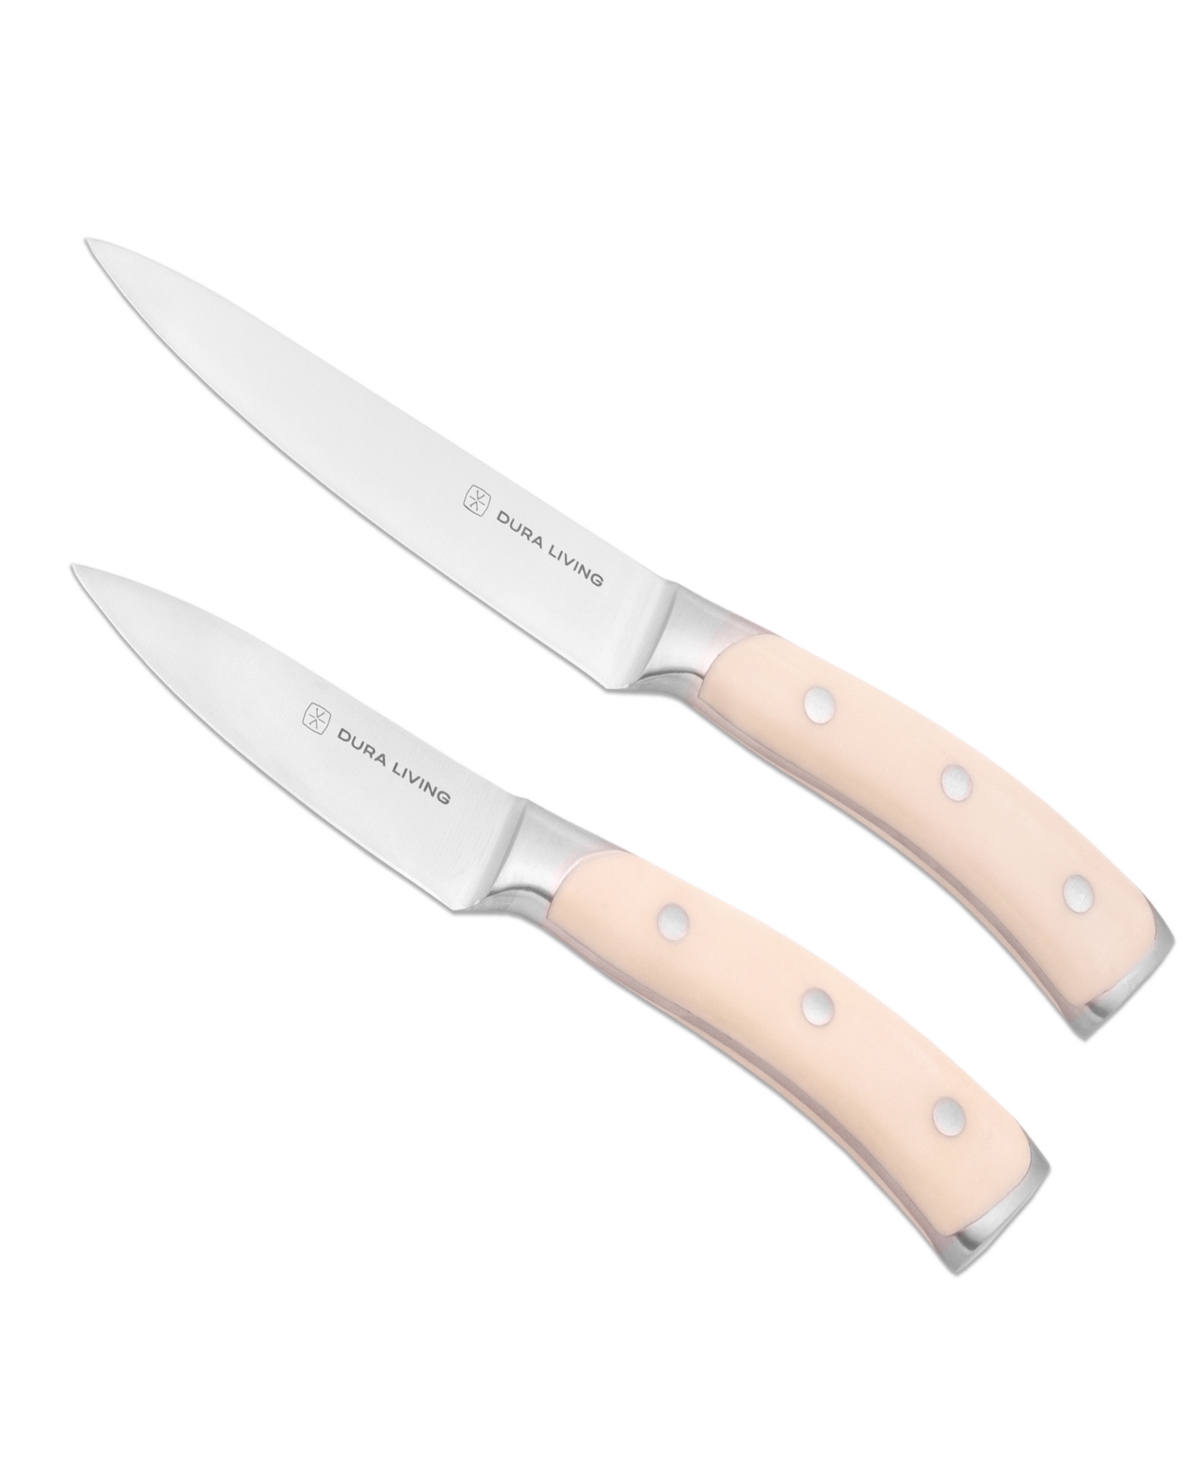 Duraliving 2-piece Professional Kitchen Knife Set In Creme